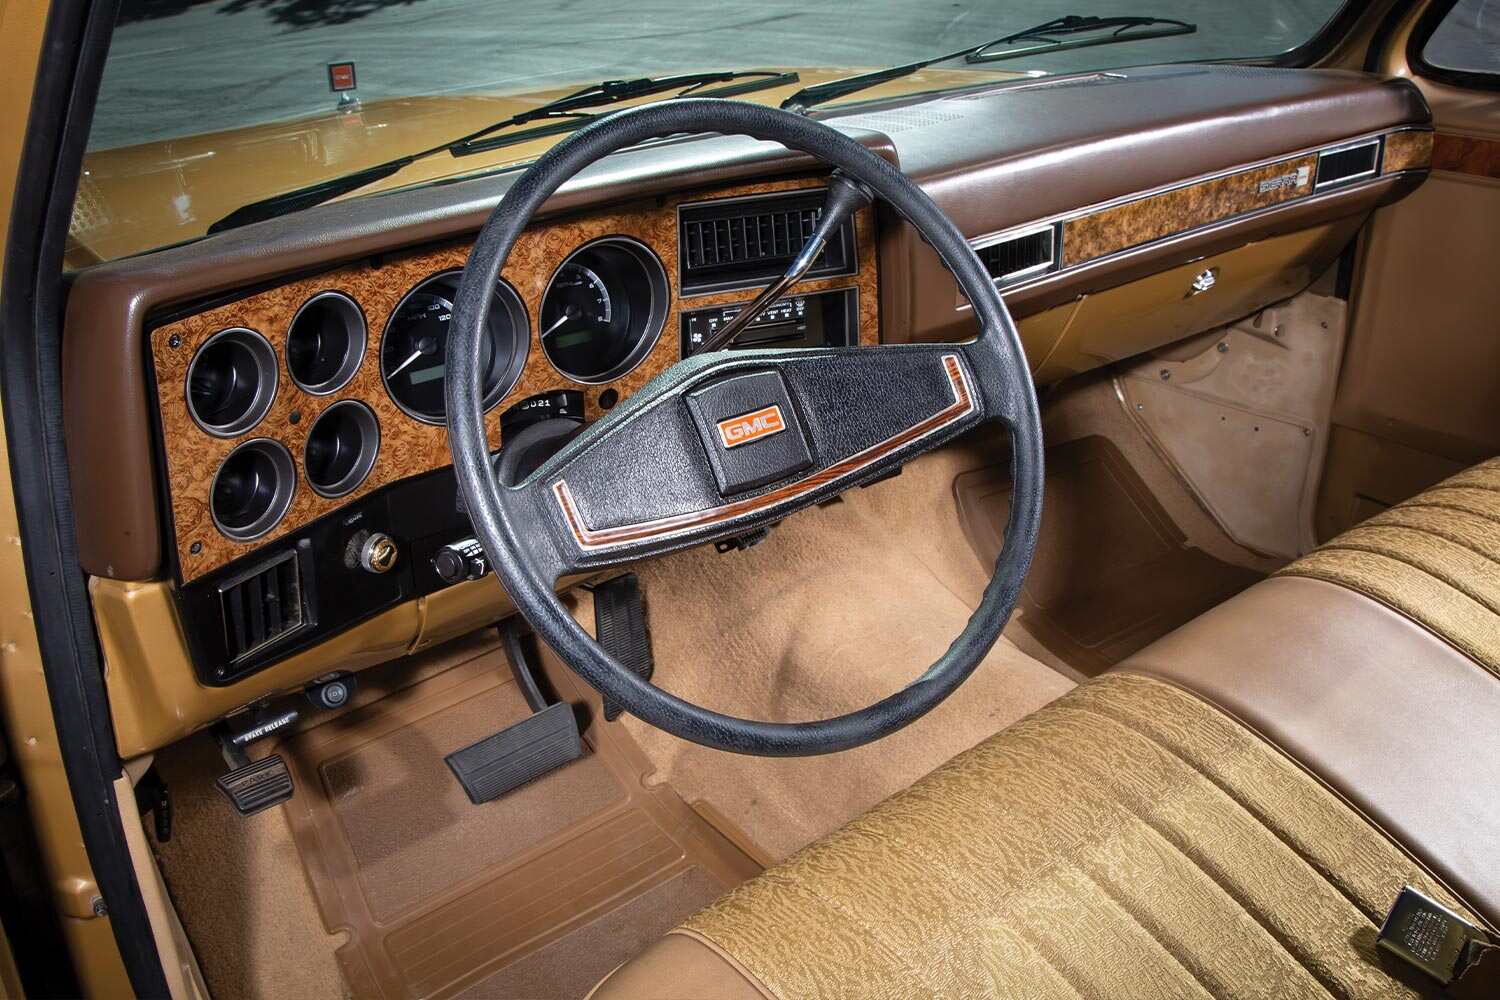 the '84 GMC Sierra's steering wheel and dashboard